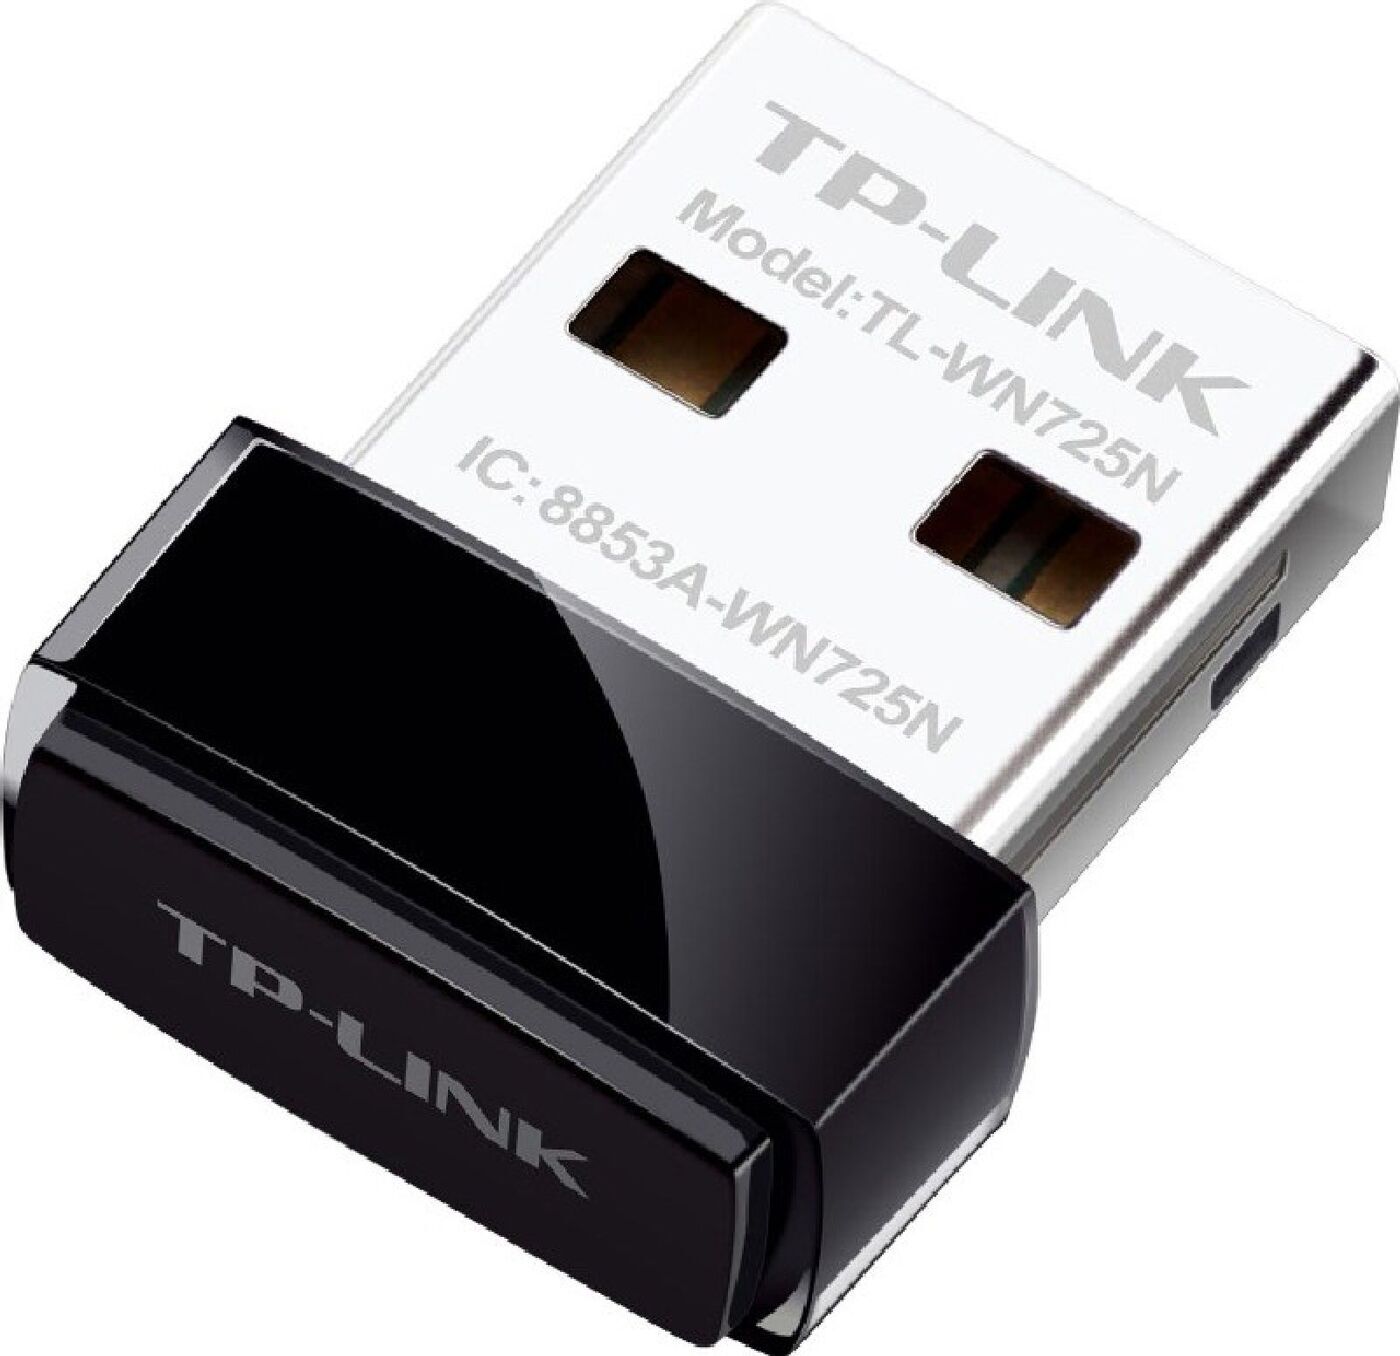 Usb адаптер tl. Wi-Fi адаптер USB TP-link TL-wn725n. TP link USB WIFI адаптер. Wi-Fi адаптер_n150 TP-link TL-wn725n (USB/Nano). Wi-Fi TP-link TL-wn725n.